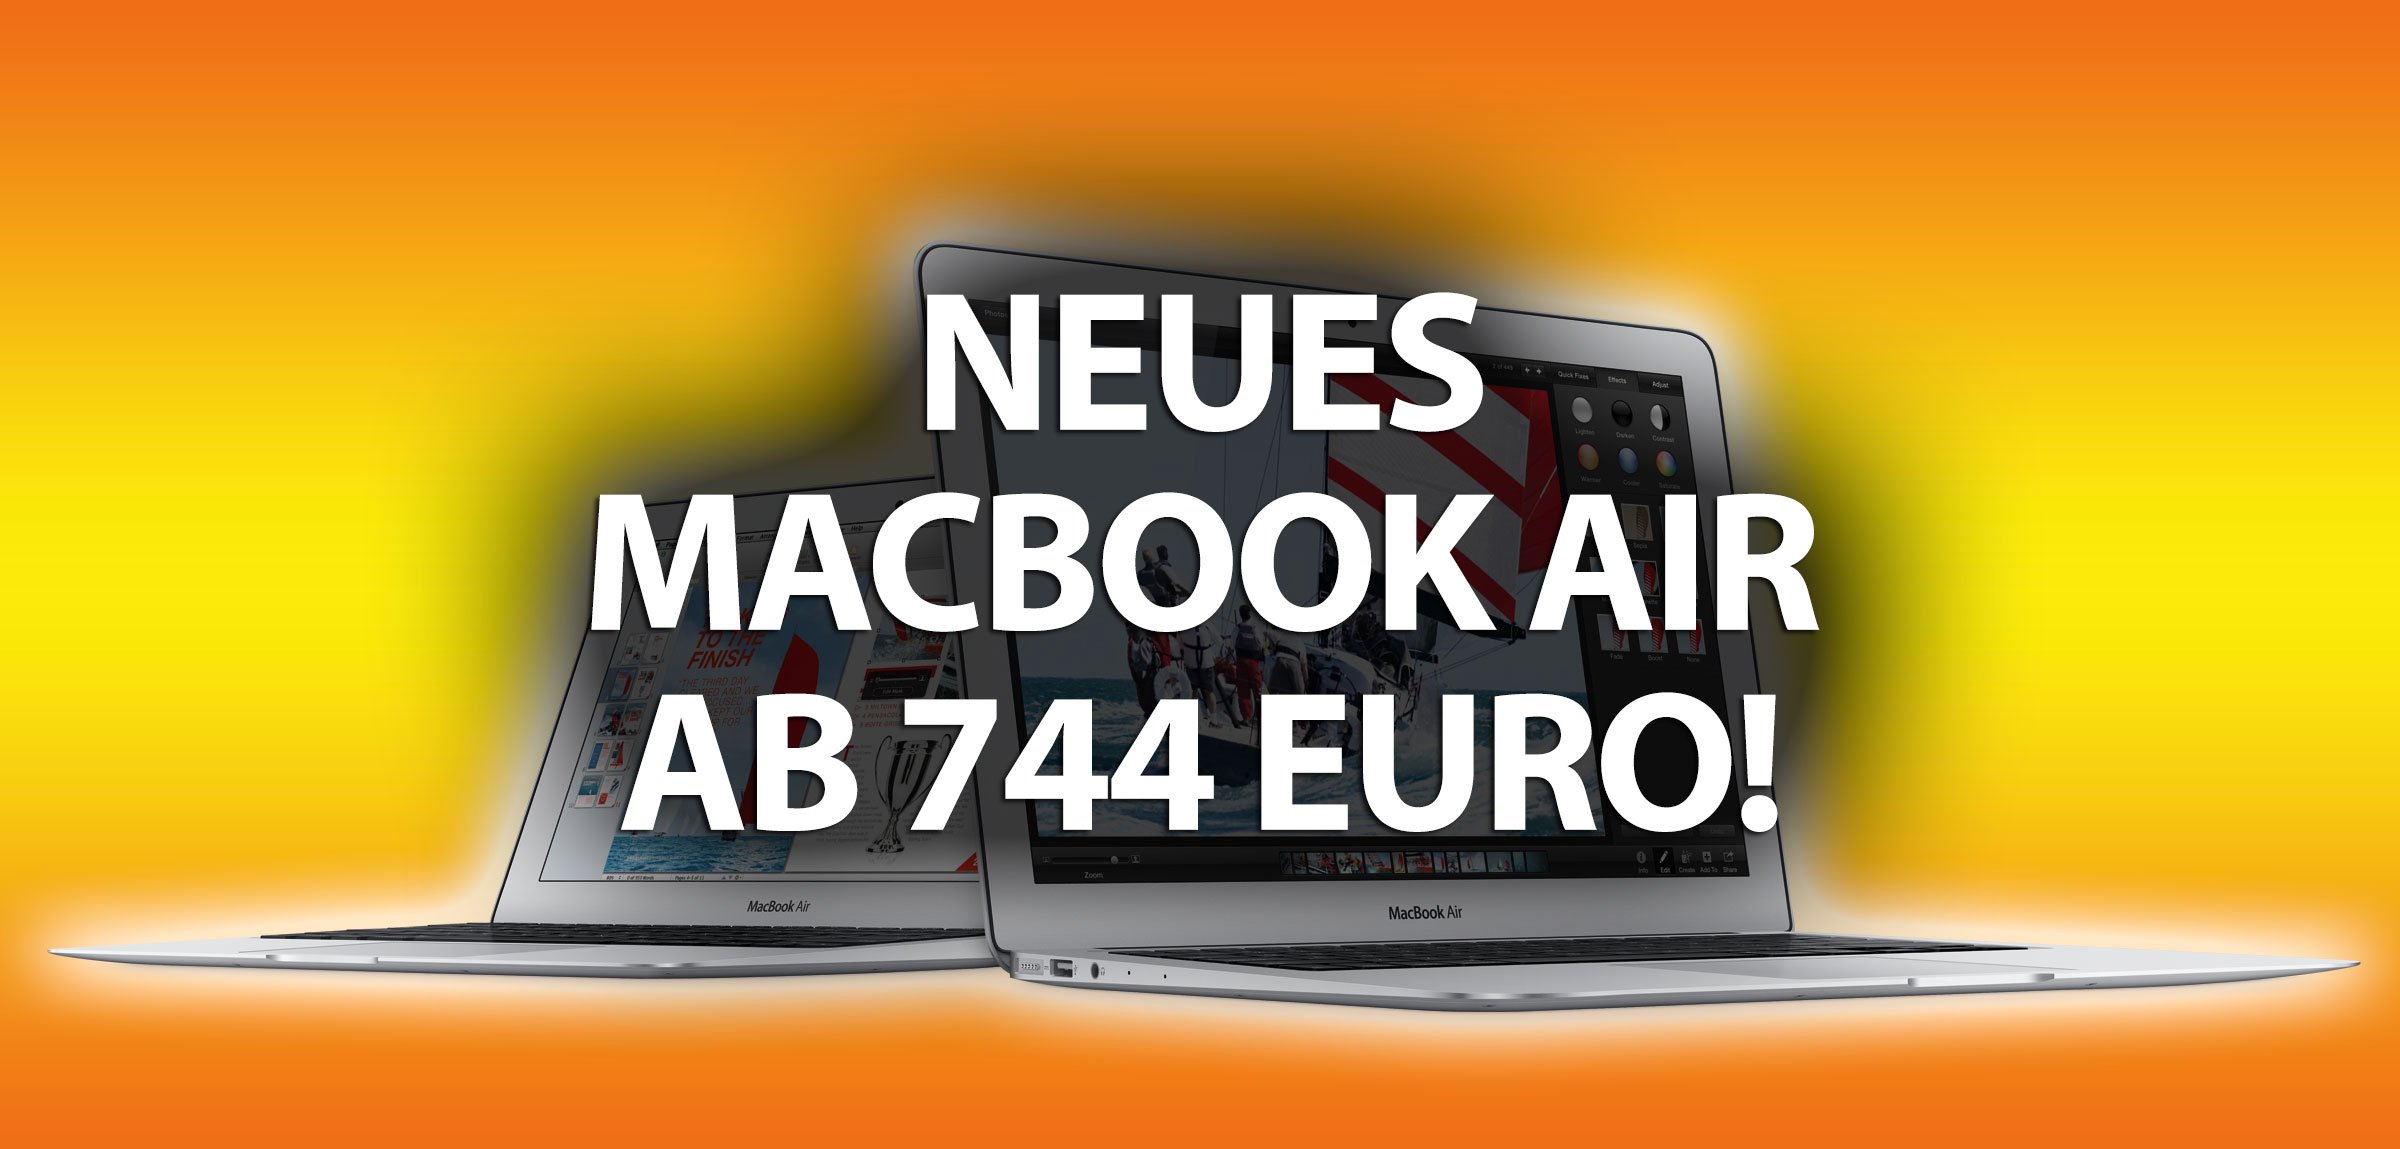 Neuer Rabattcode für Macbook Air 2014: Bester Preis! (Update: Studenten-Rabatt) 4